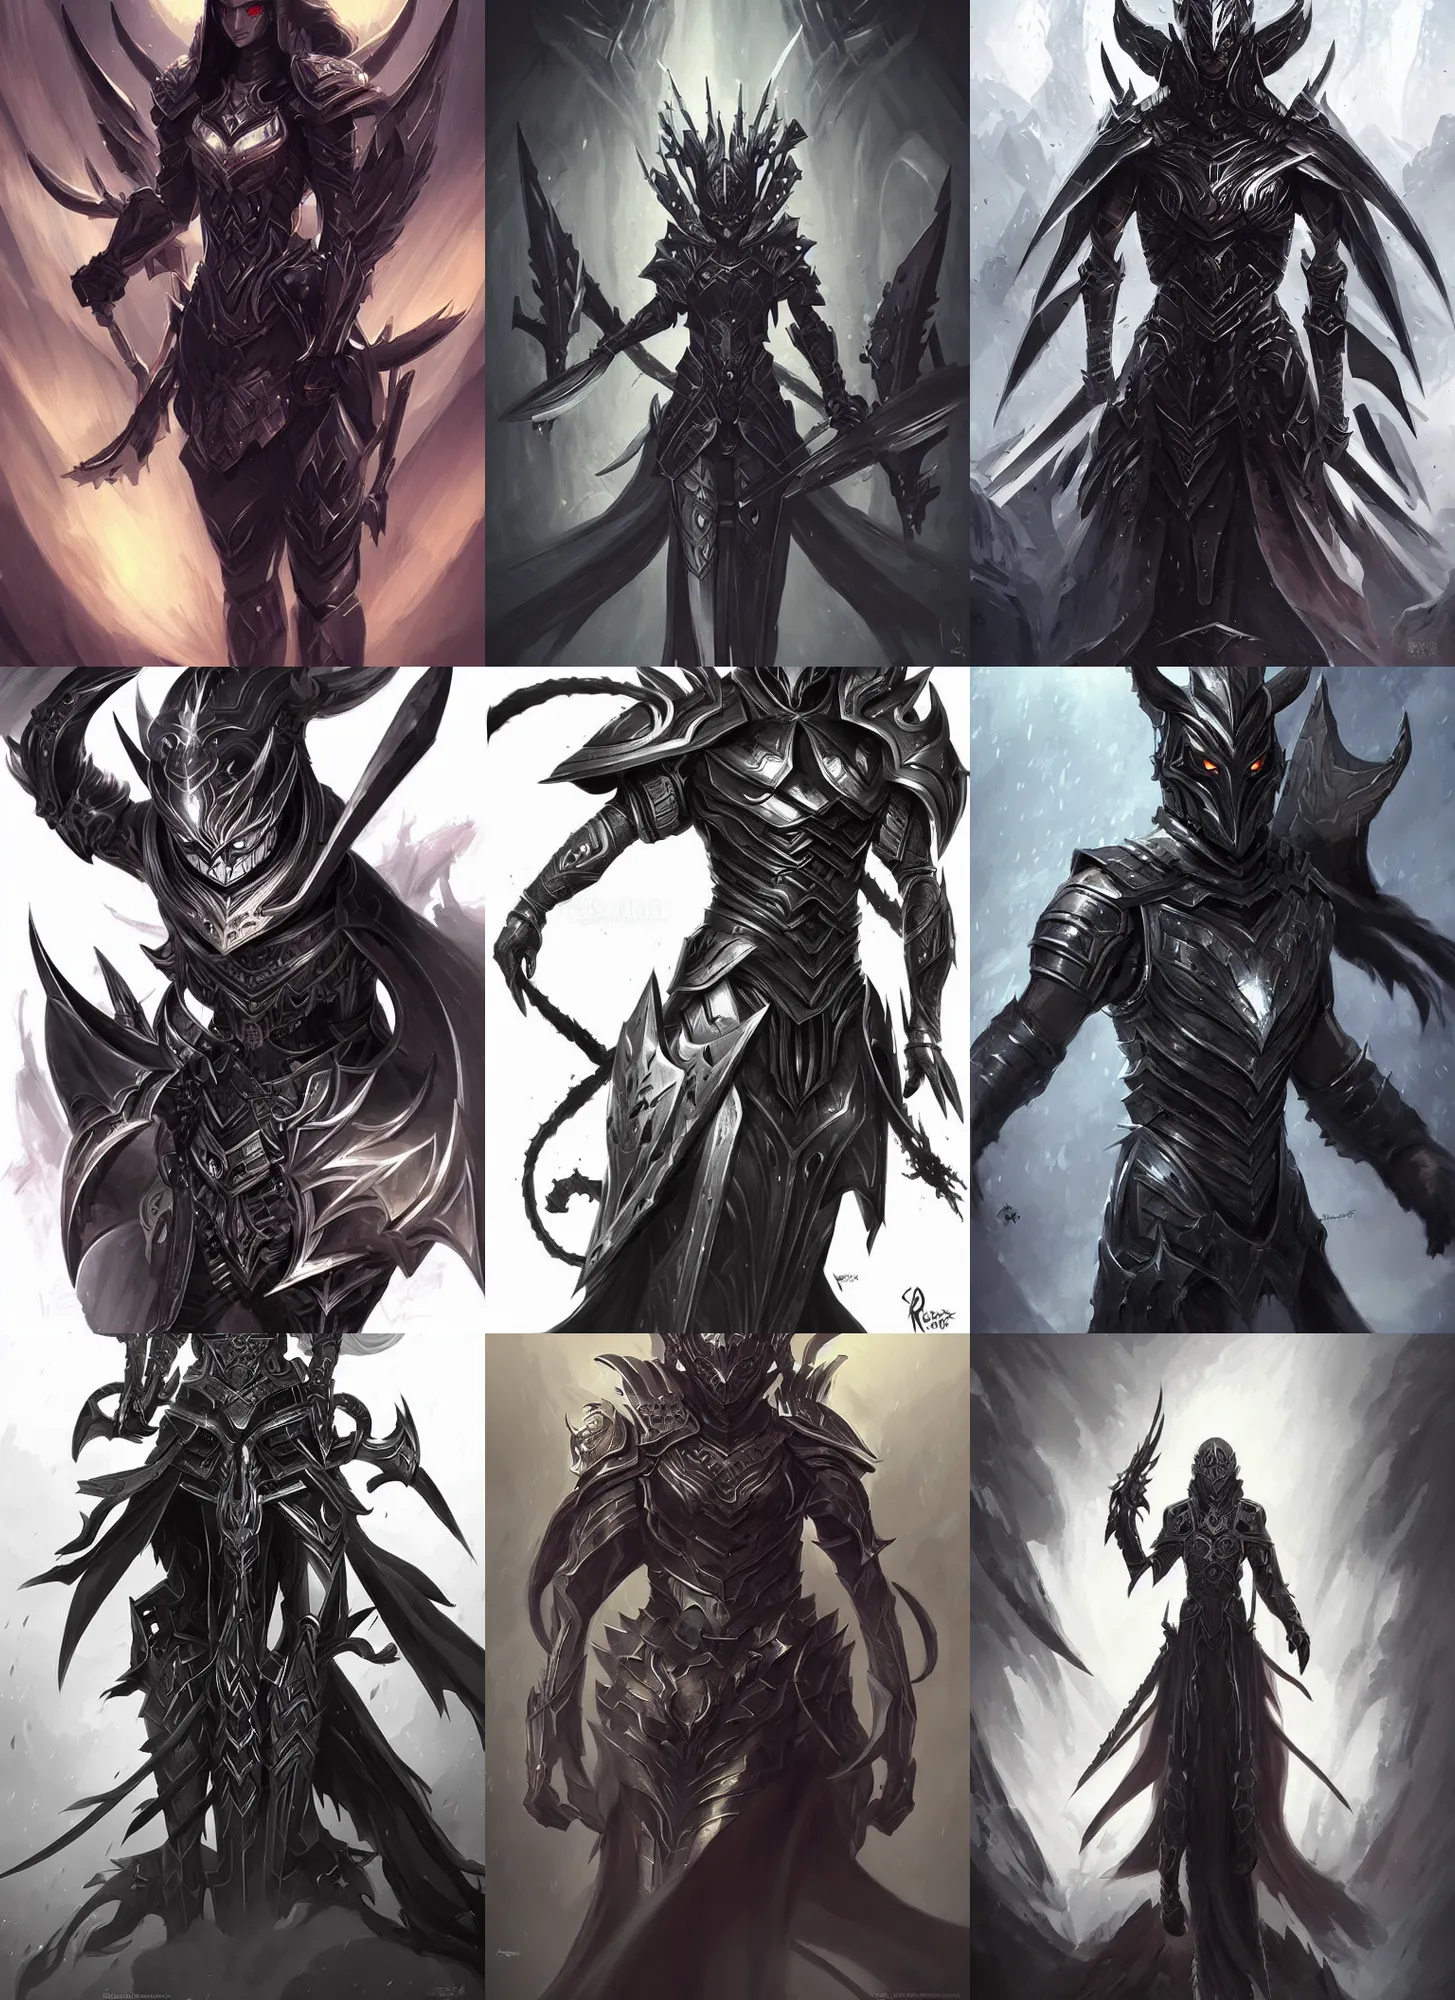 Prompt: set of armor possessed by vengeful spirit, black, evil, menacing, high fantasy, highly detailed, smooth, sharp focus, digital illustration, by rossdraws, artgerm, wlop